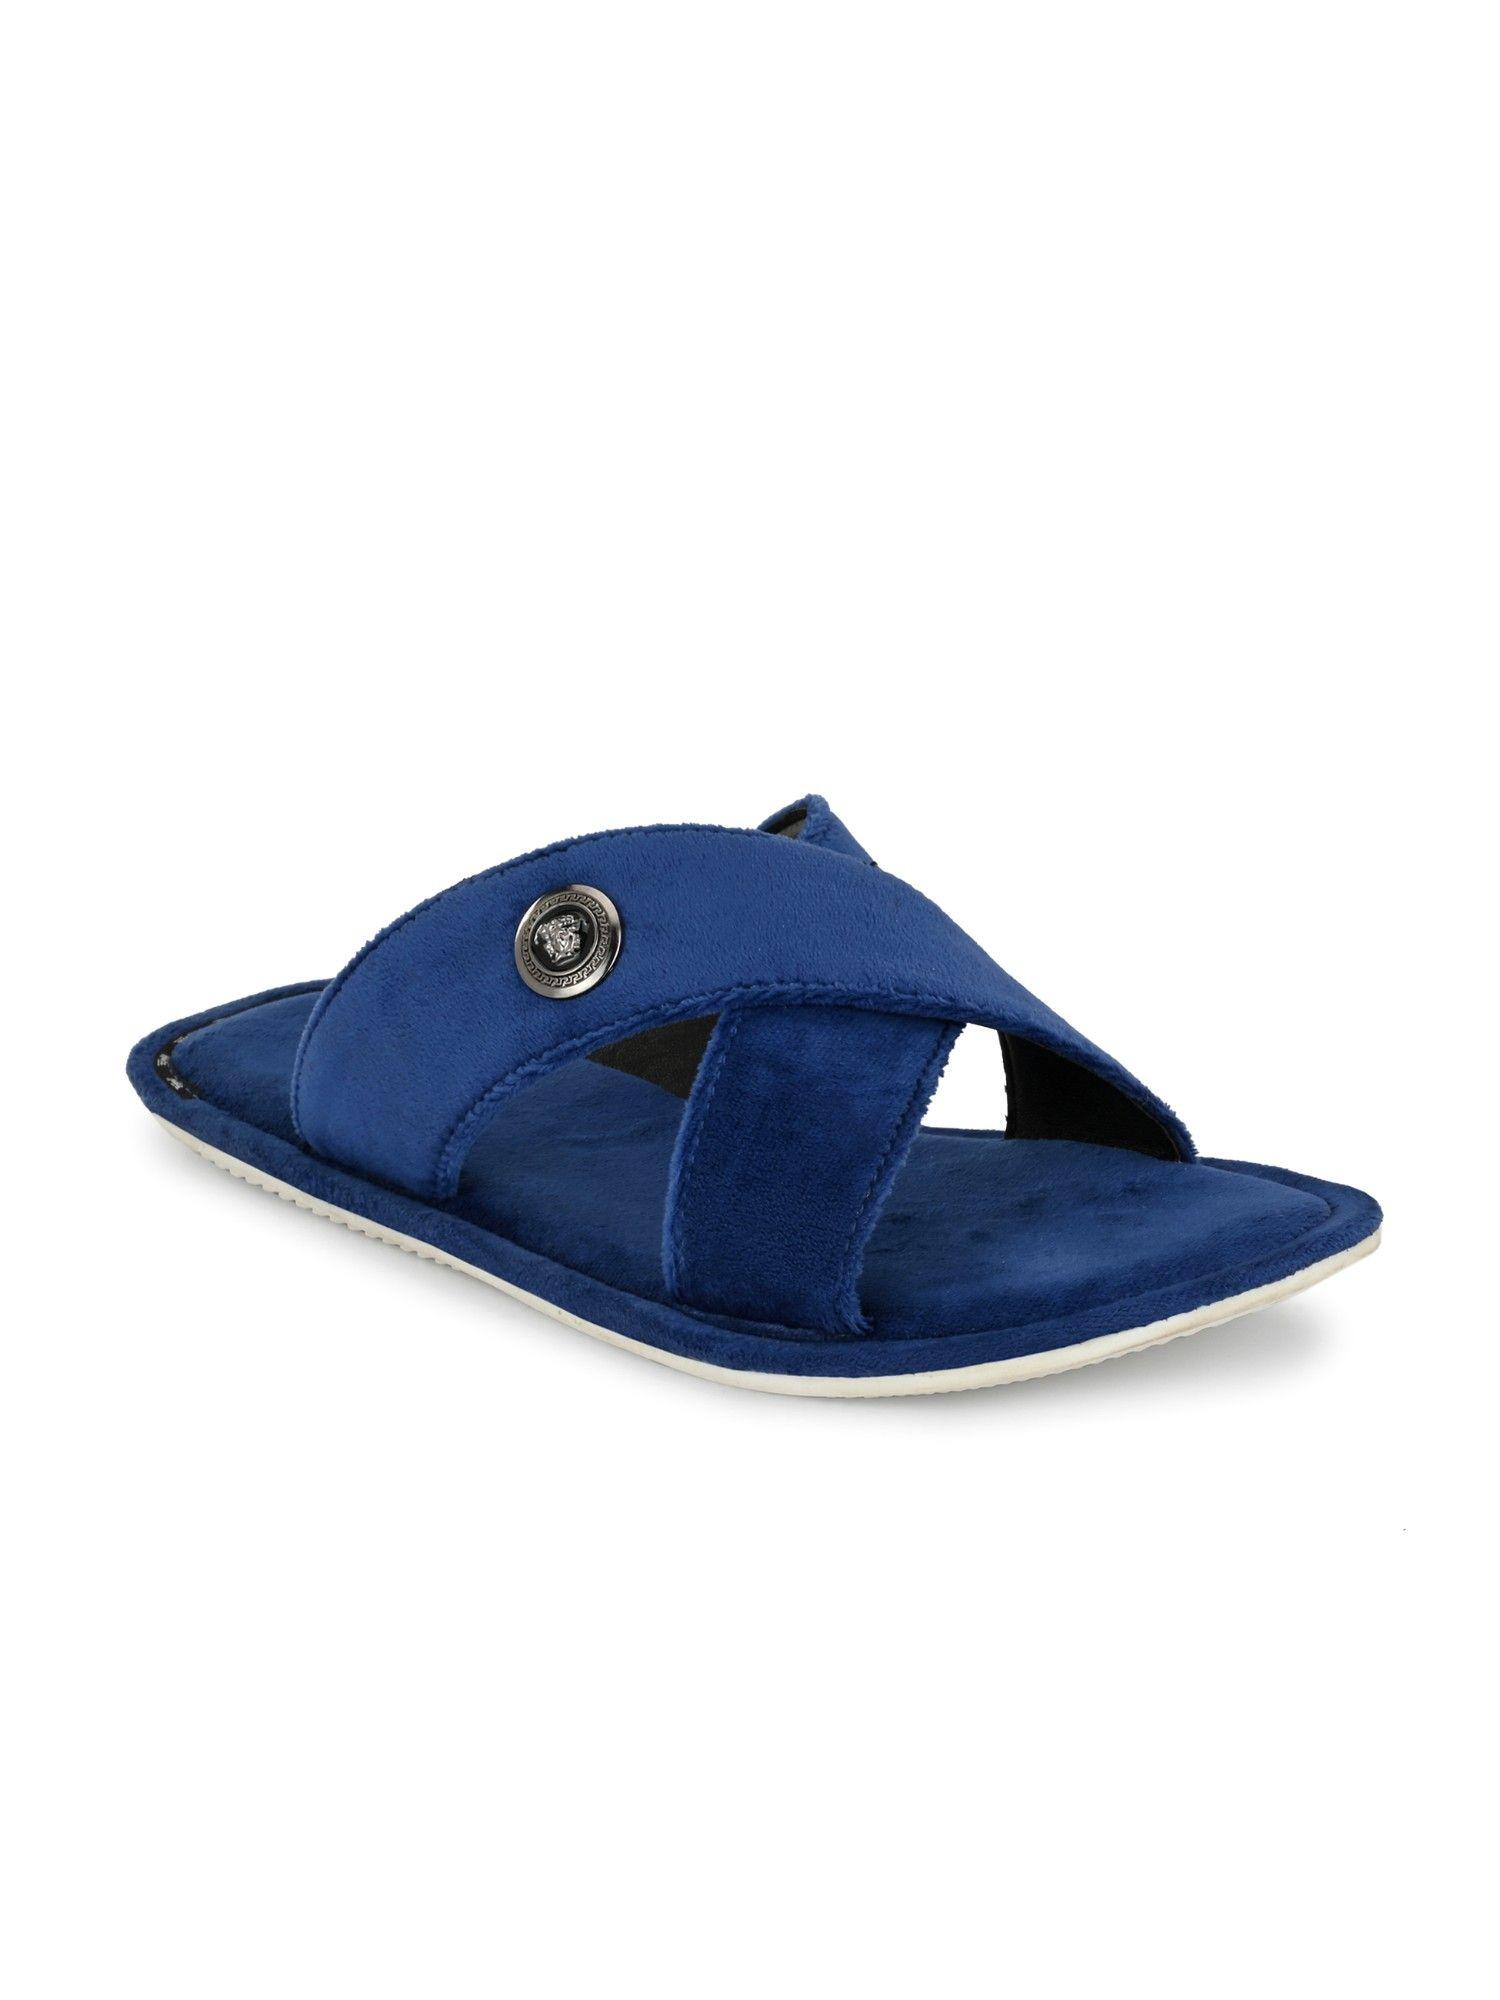 men's blue leather casual open toe indoor outdoor slippers